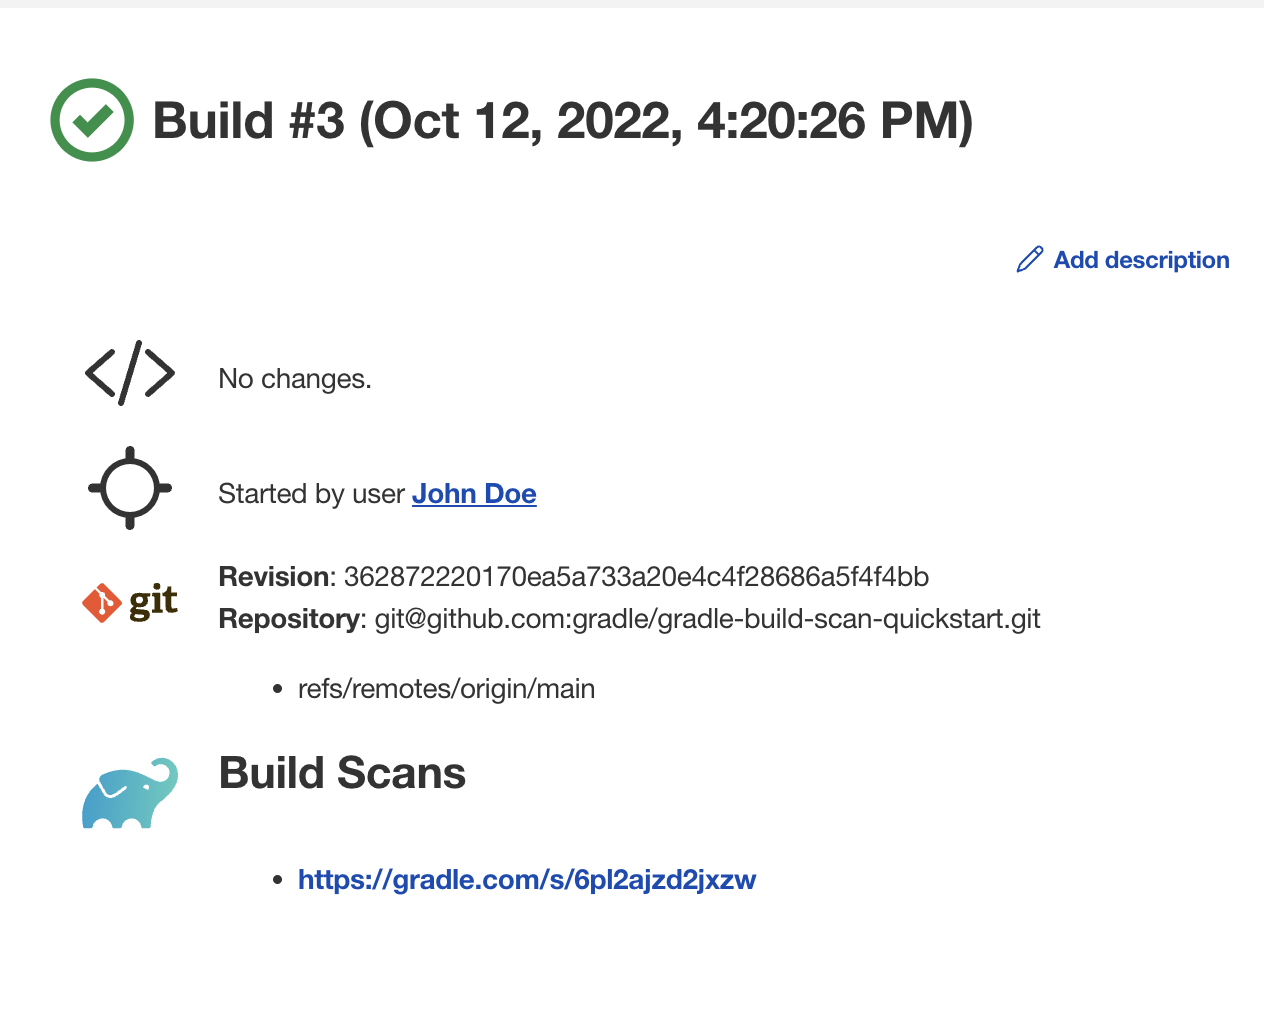 Build Scan link